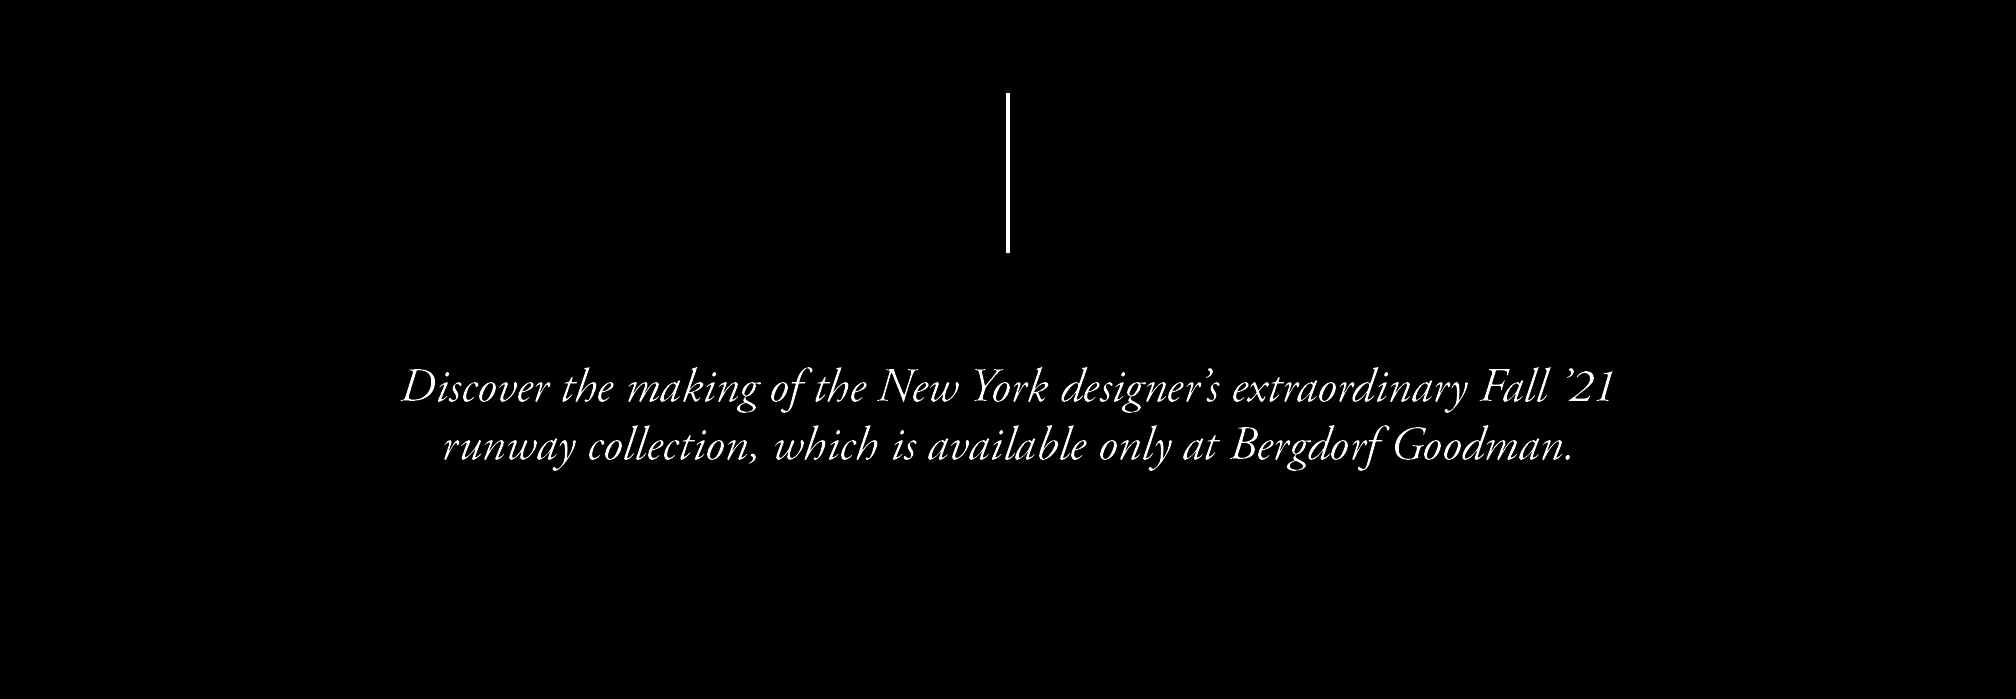 Marc Jacobs Brings Crowd to Bergdorf Goodman After Dark – WWD